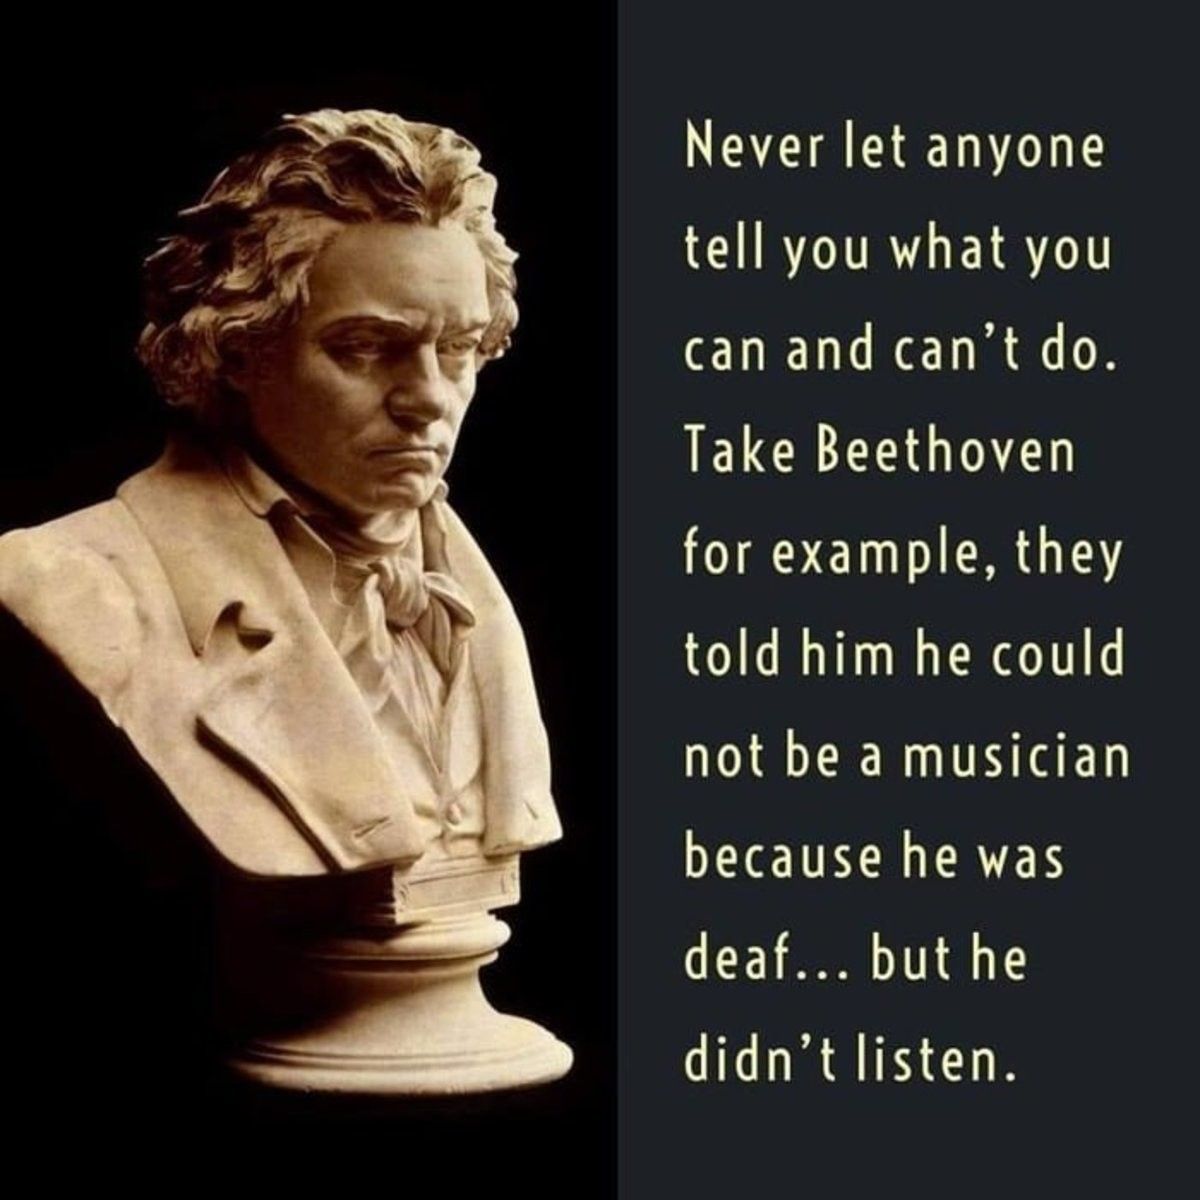 Be like Beethoven